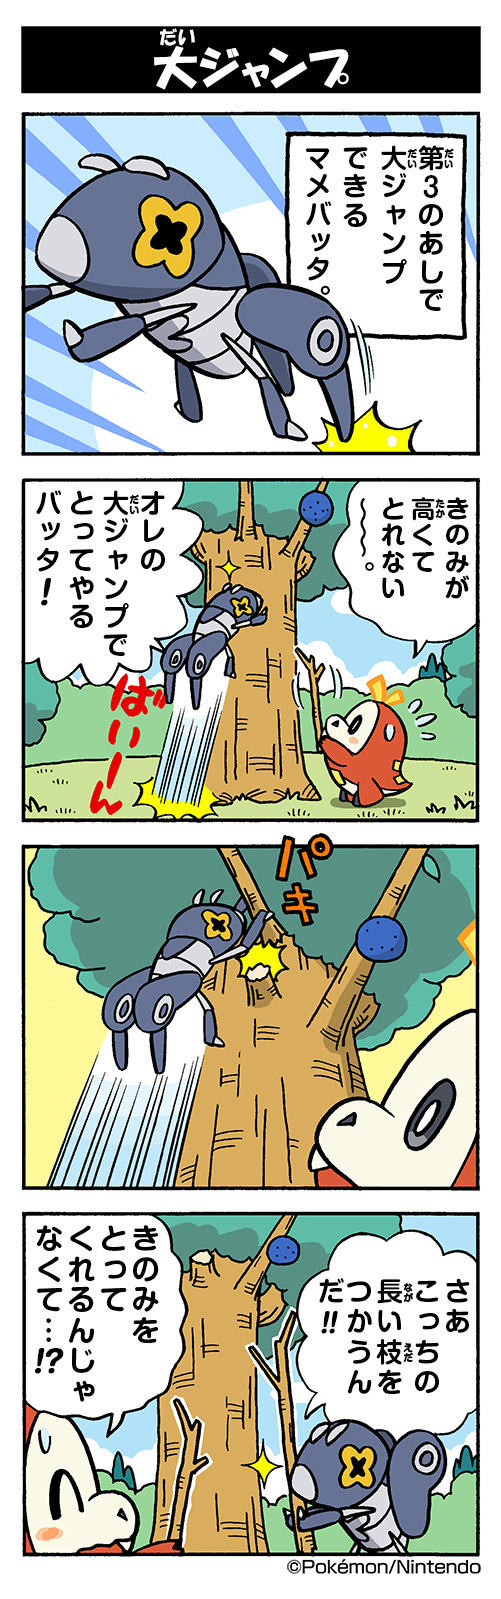 fuecoco and nymble (pokemon) drawn by yamashita_takahiro